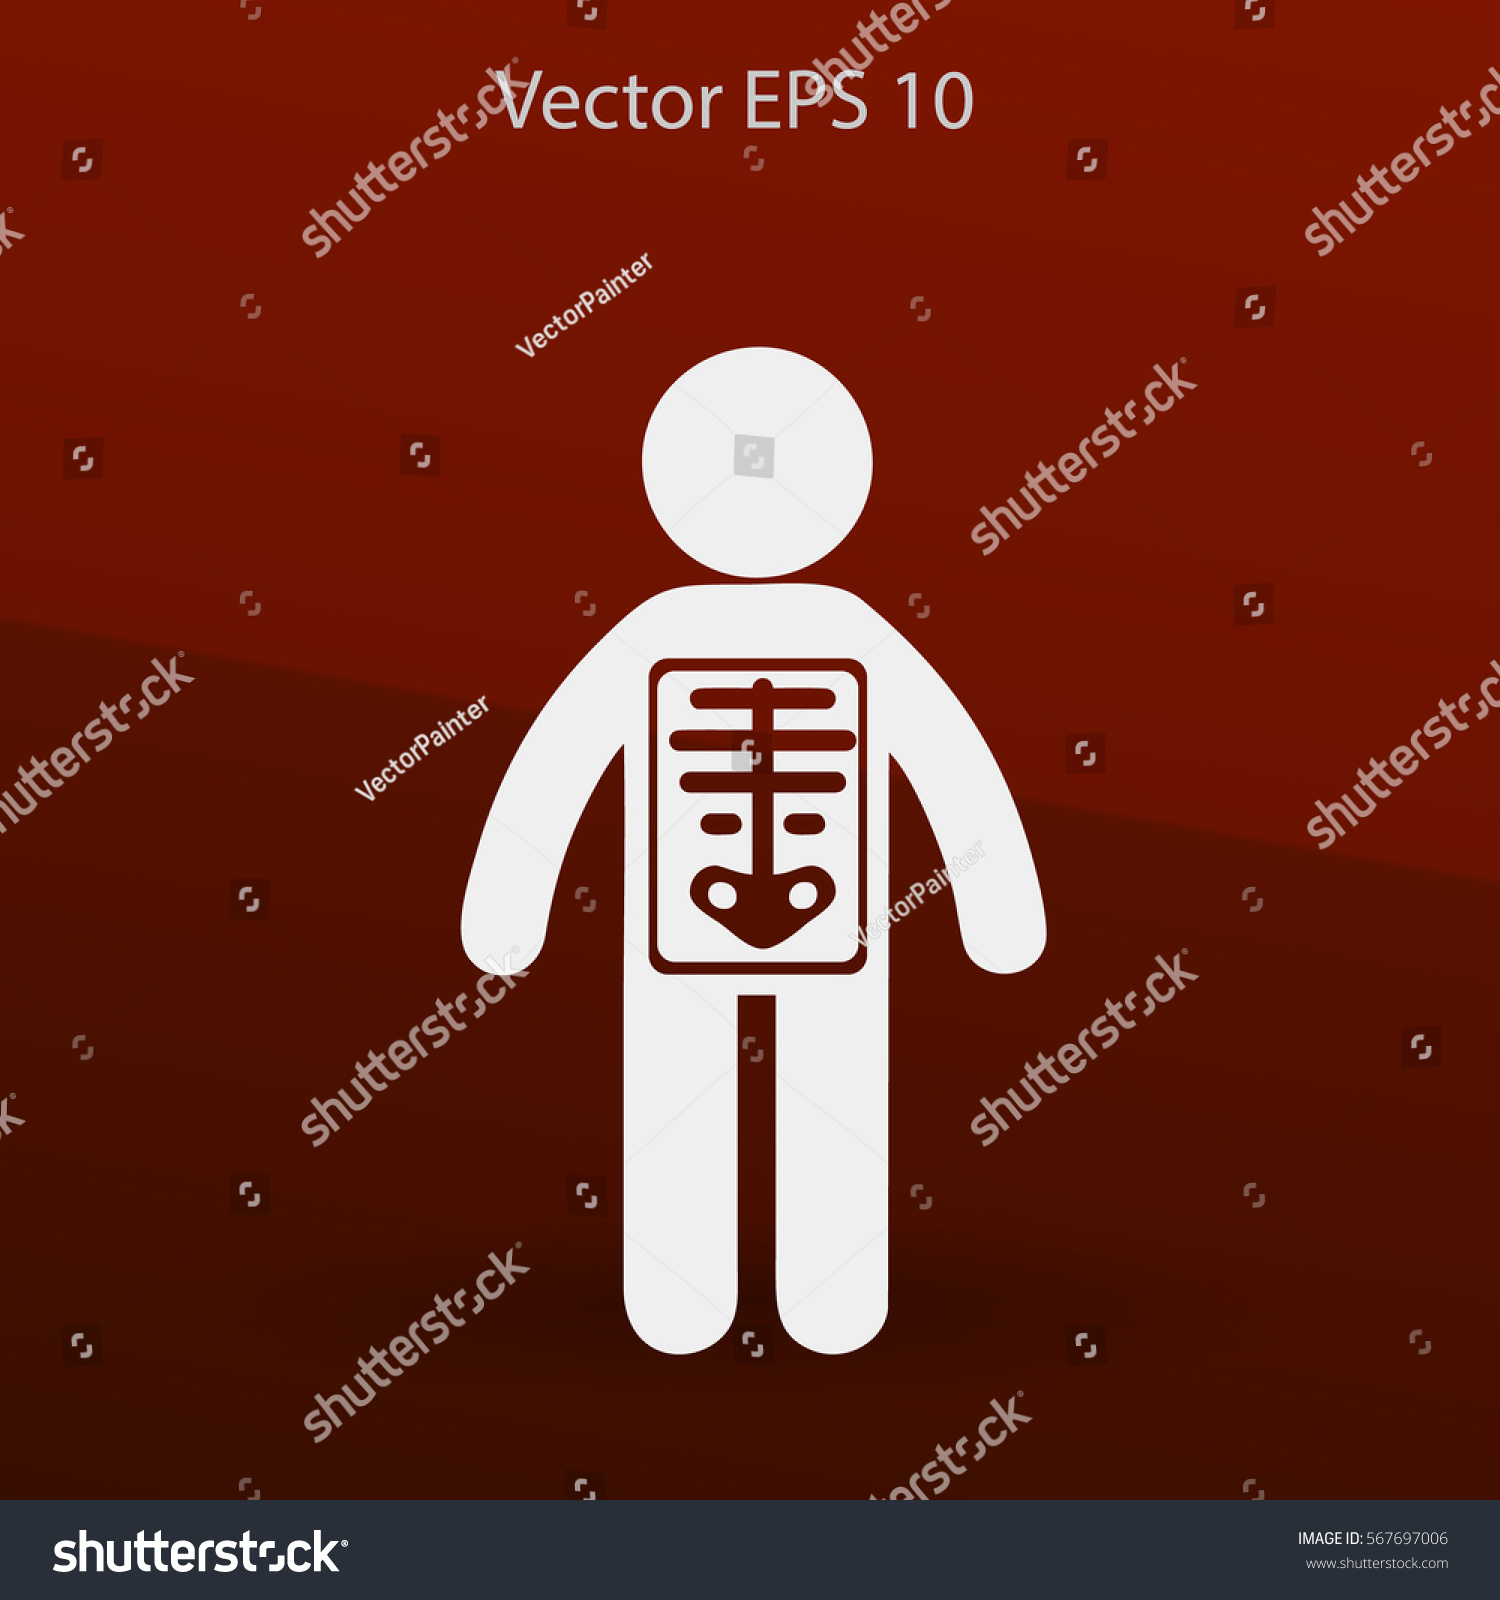 Edit Vectors Free Online - x-ray vector | Shutterstock Editor